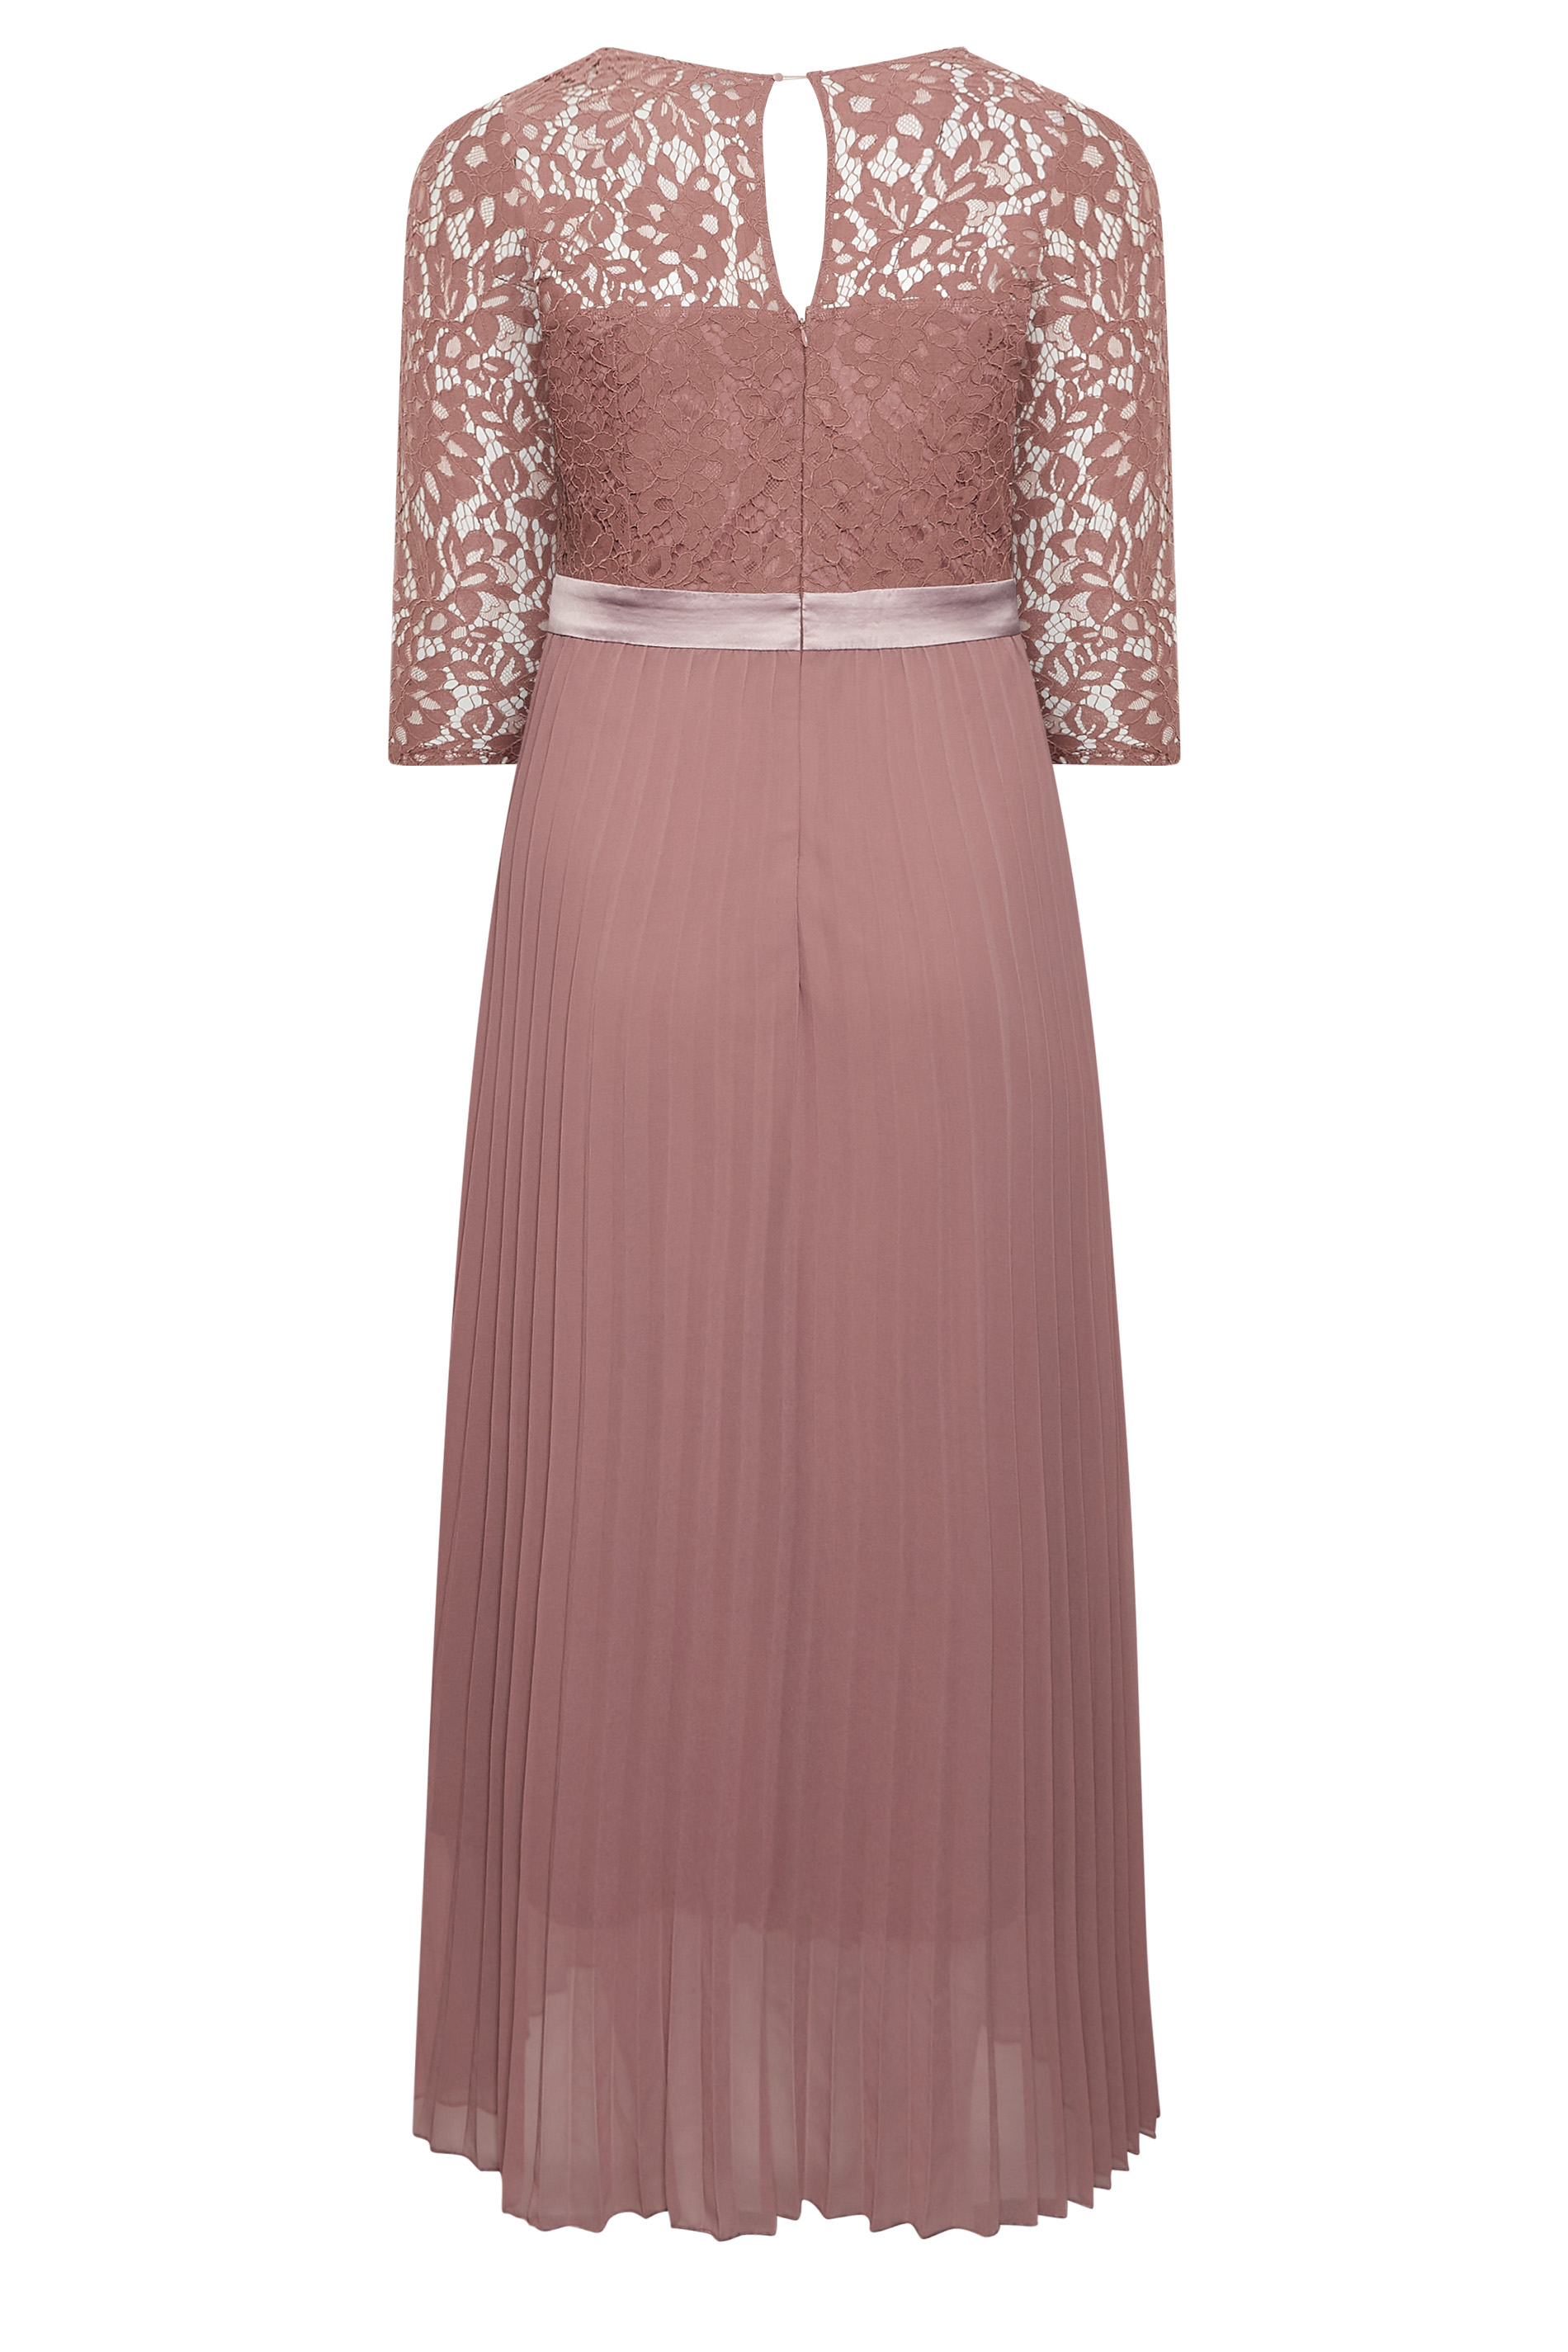 Plus Size YOURS LONDON Curve Blush Pink Lace Pleated Maxi Dress